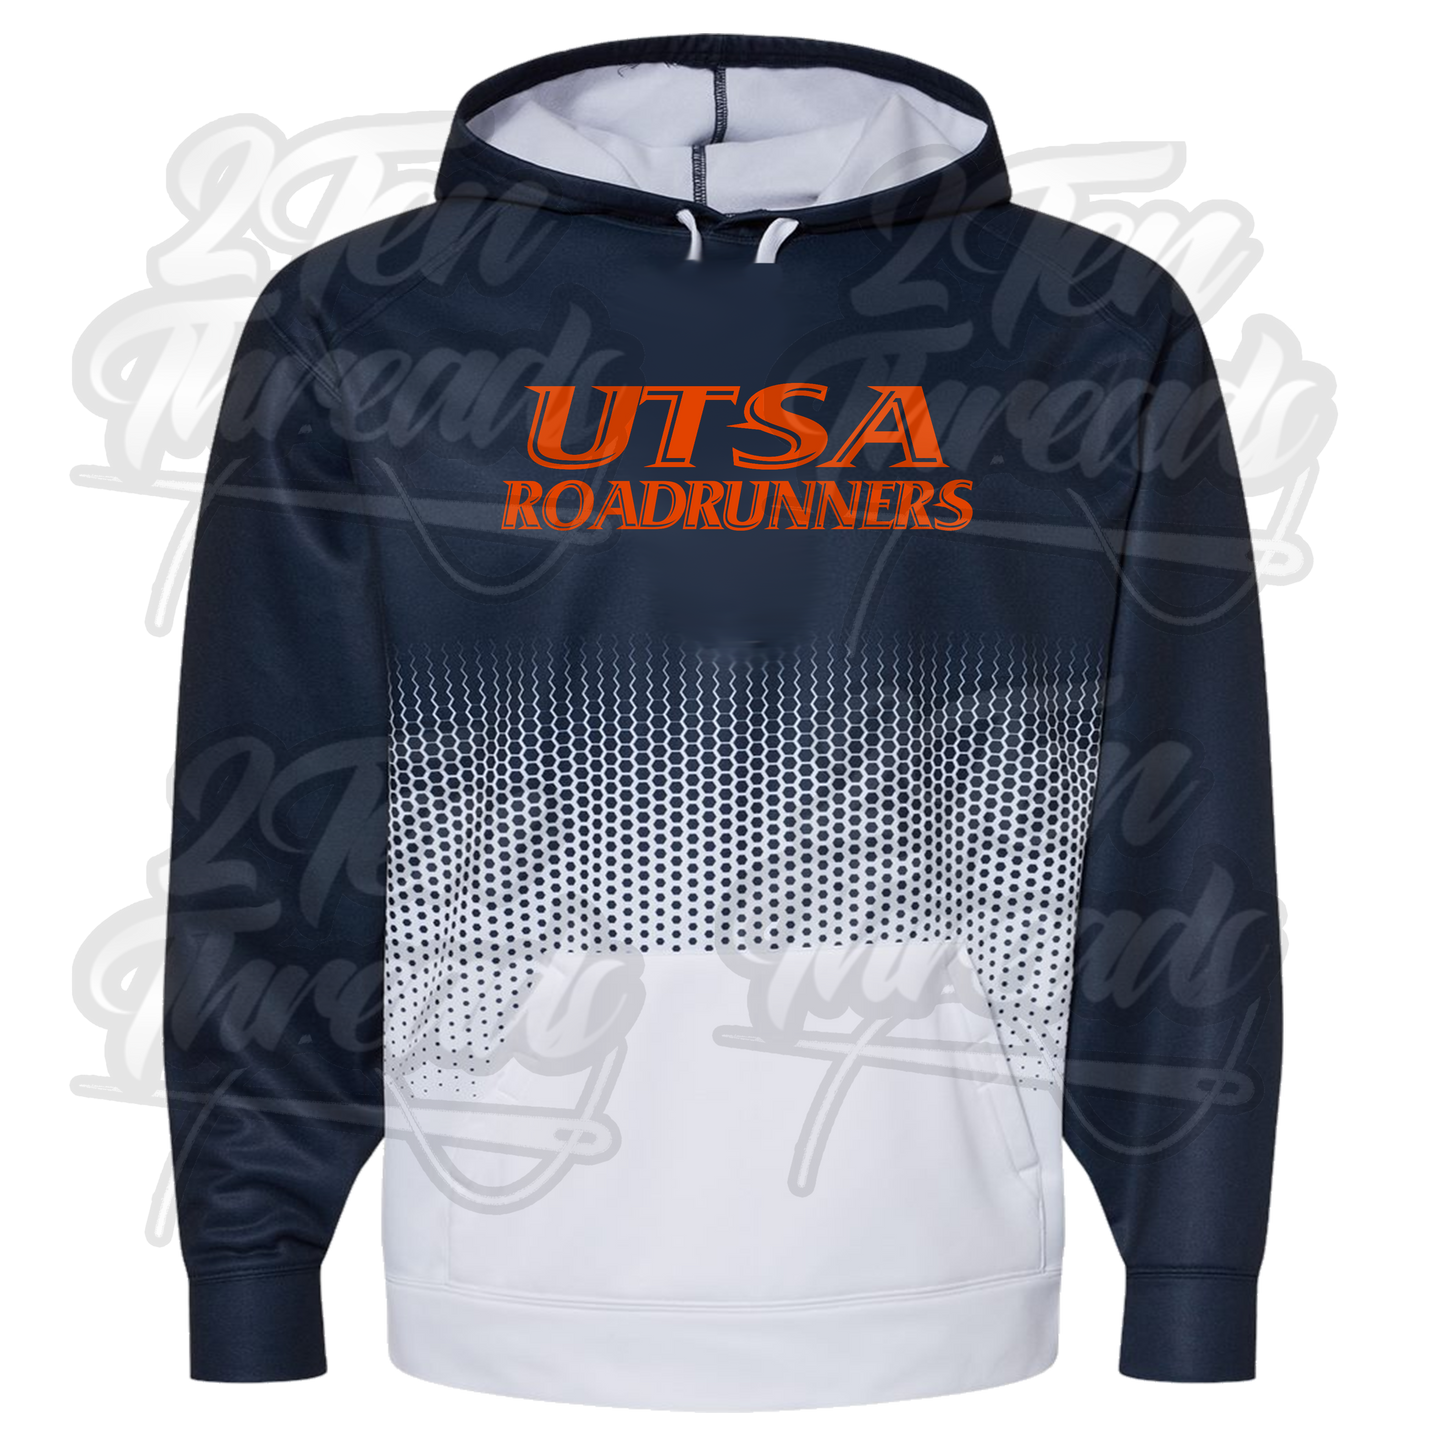 UTSA Runners Hoodie with Orange Text